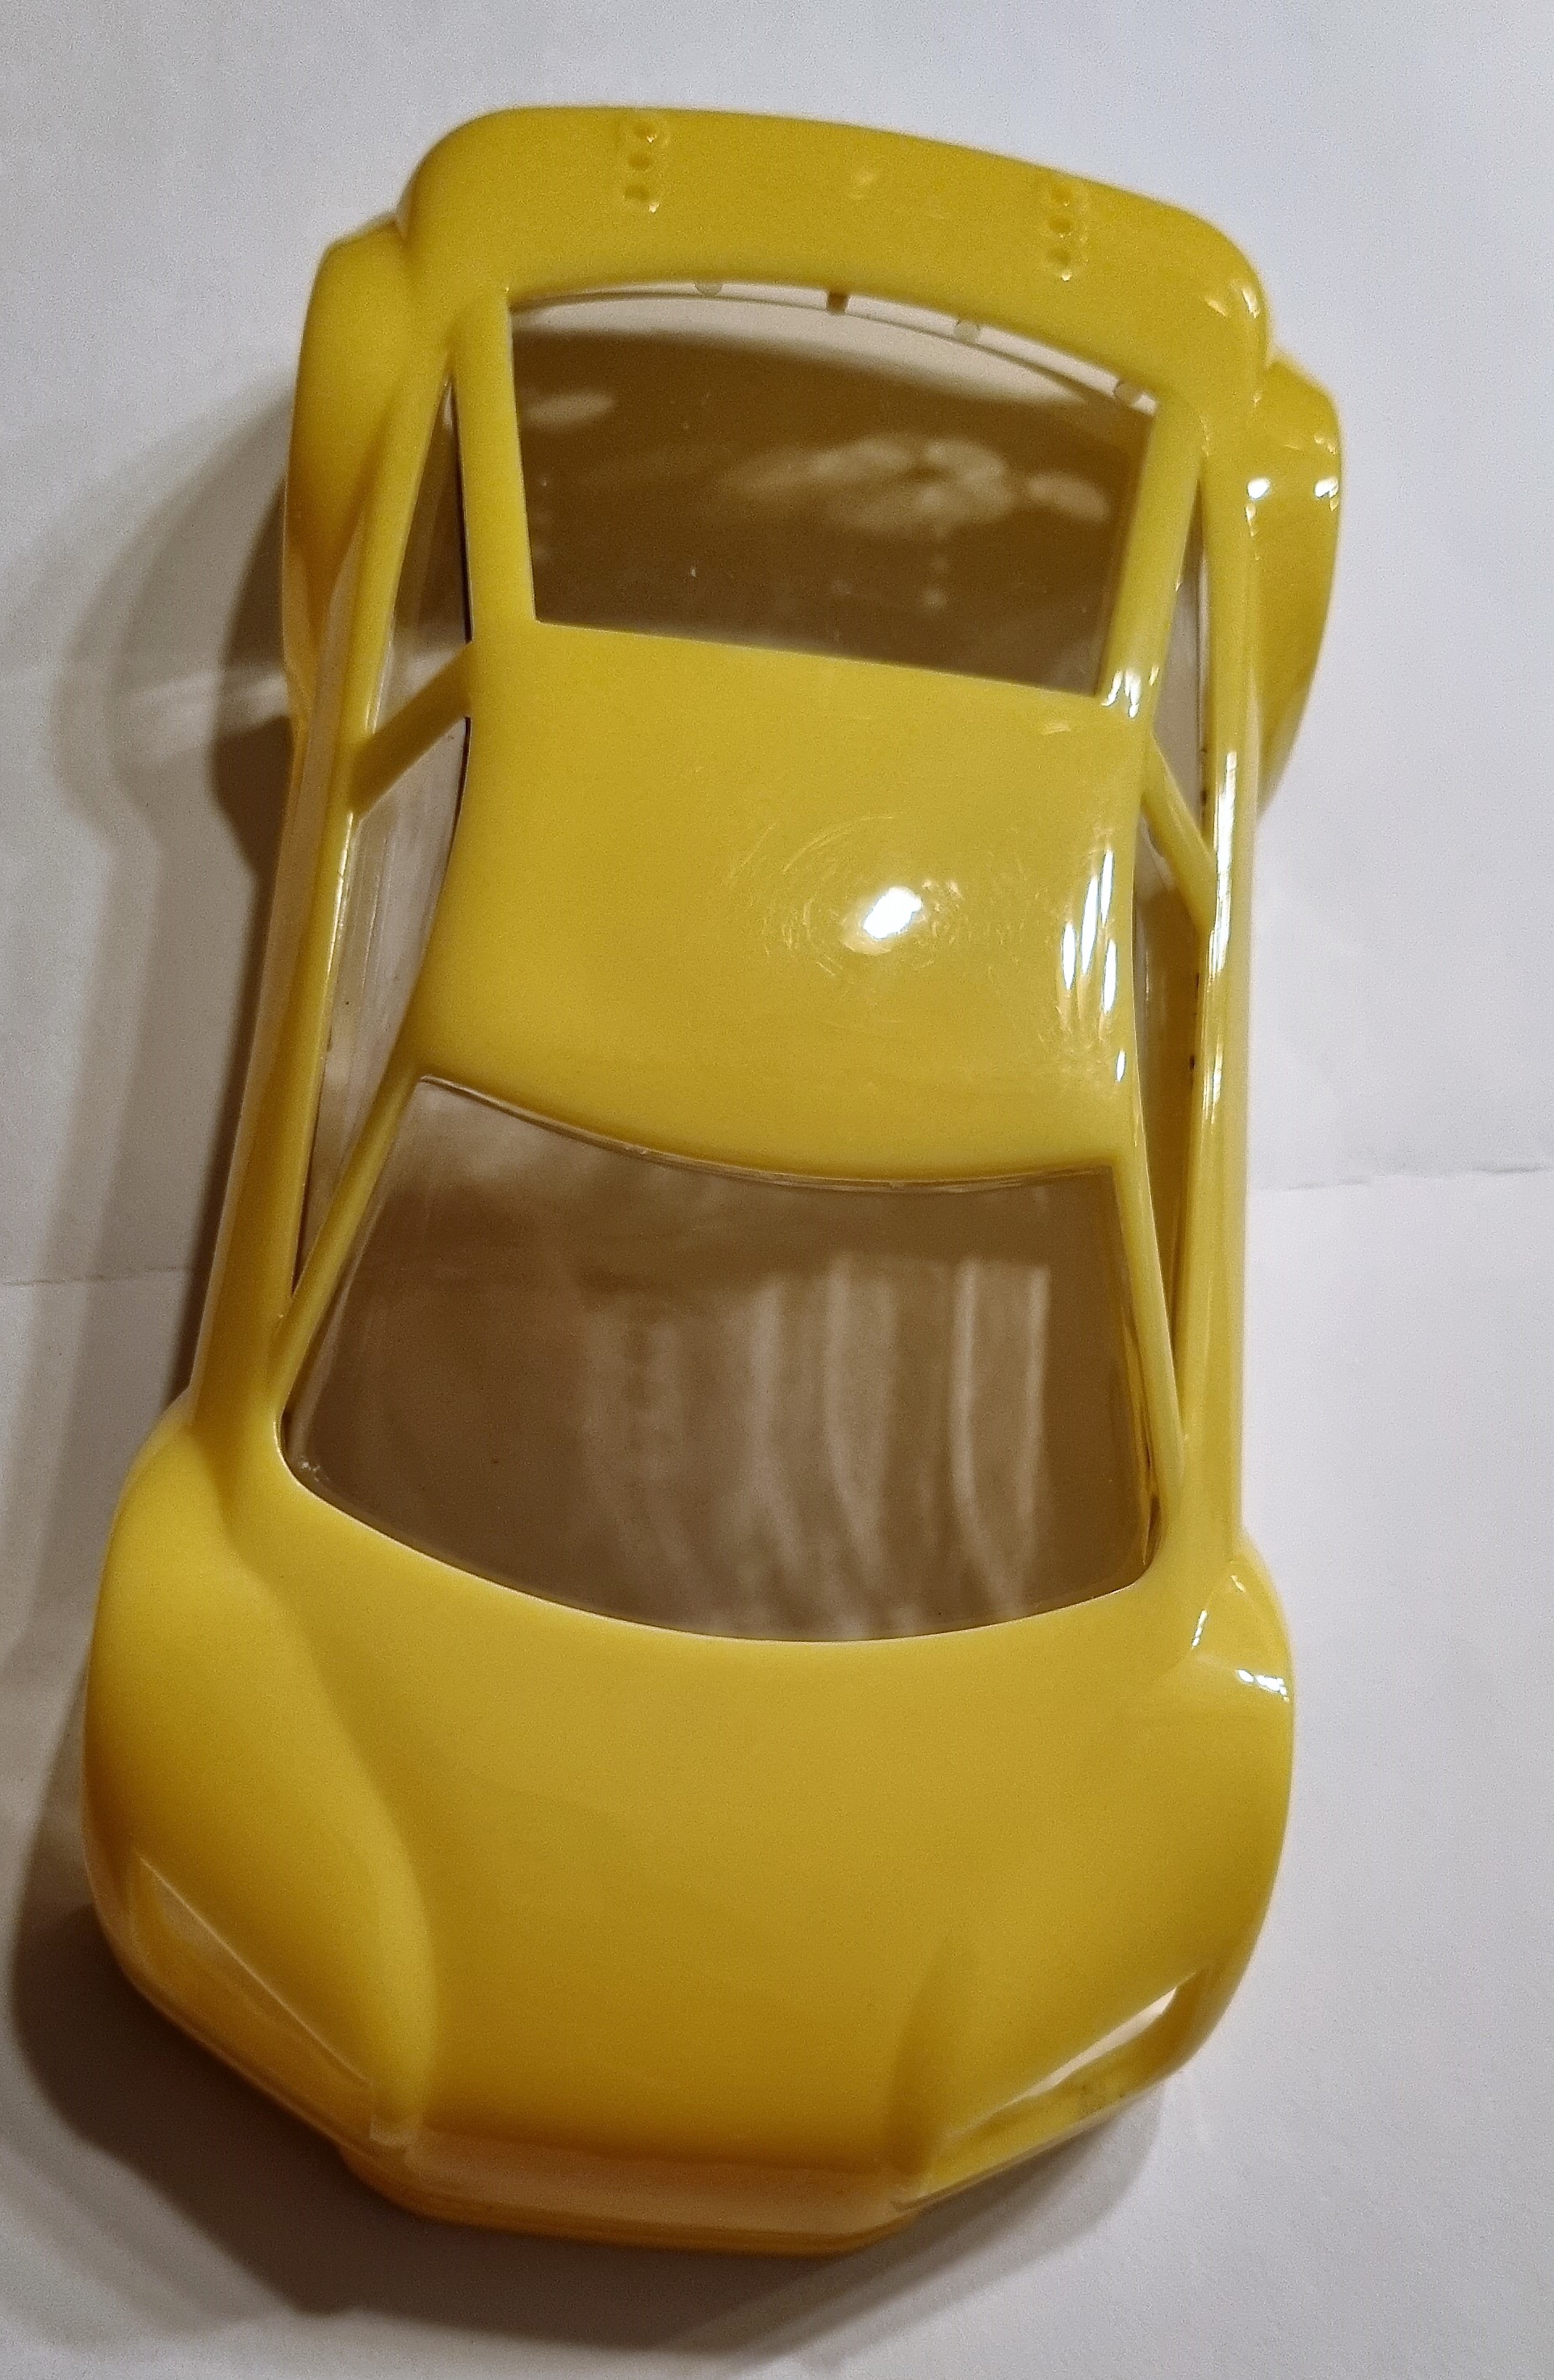 JOMUREMA JR-GT01 Car Body Set - Yellow